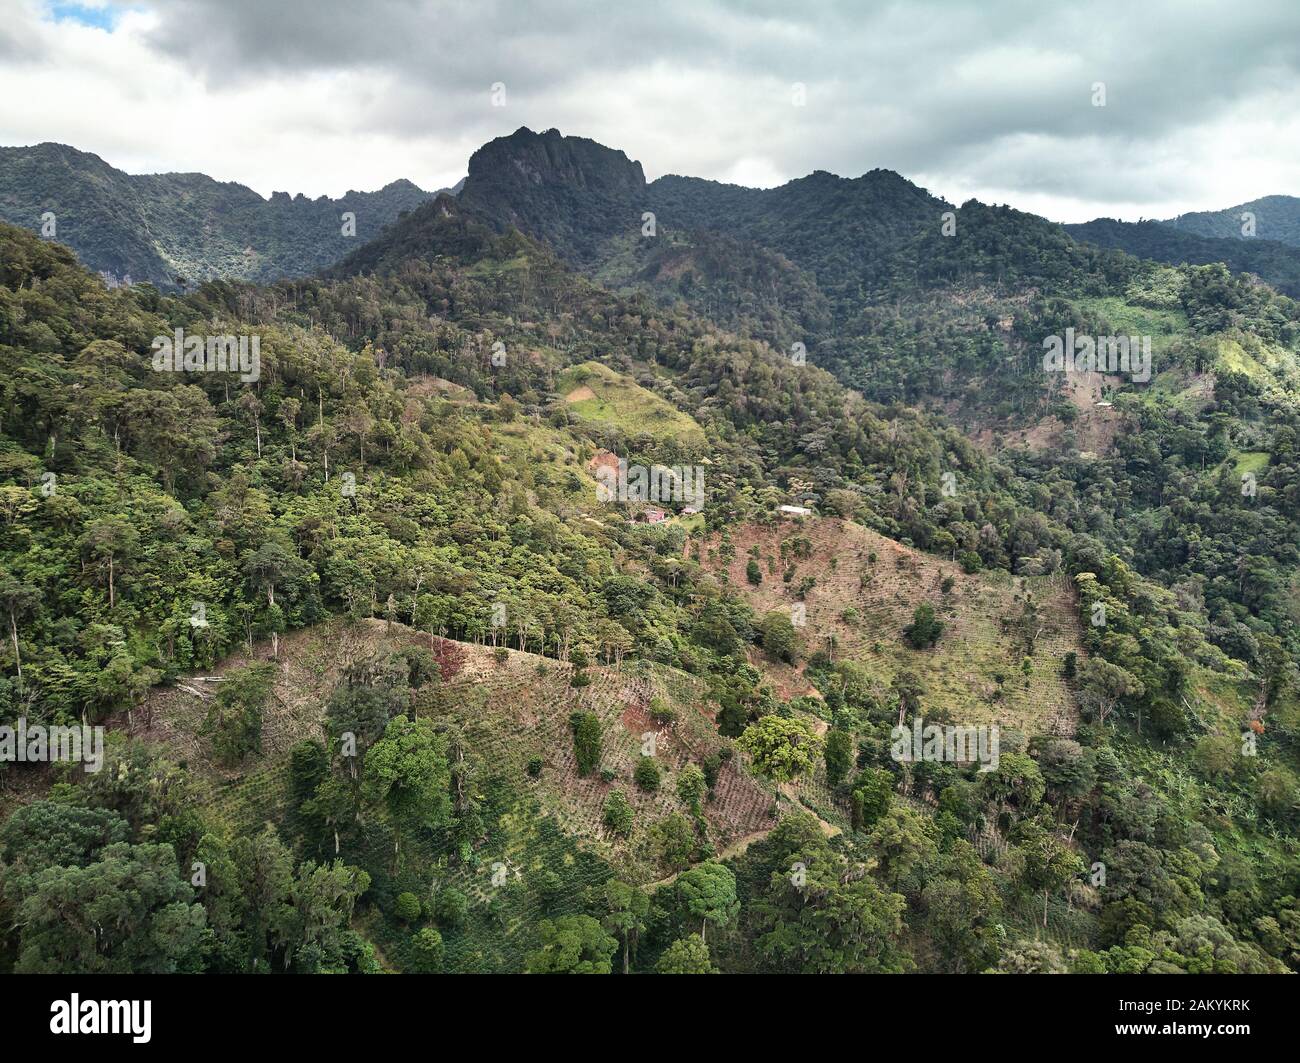 Coffee farm plantation on high mountain landscape aerial view Stock Photo